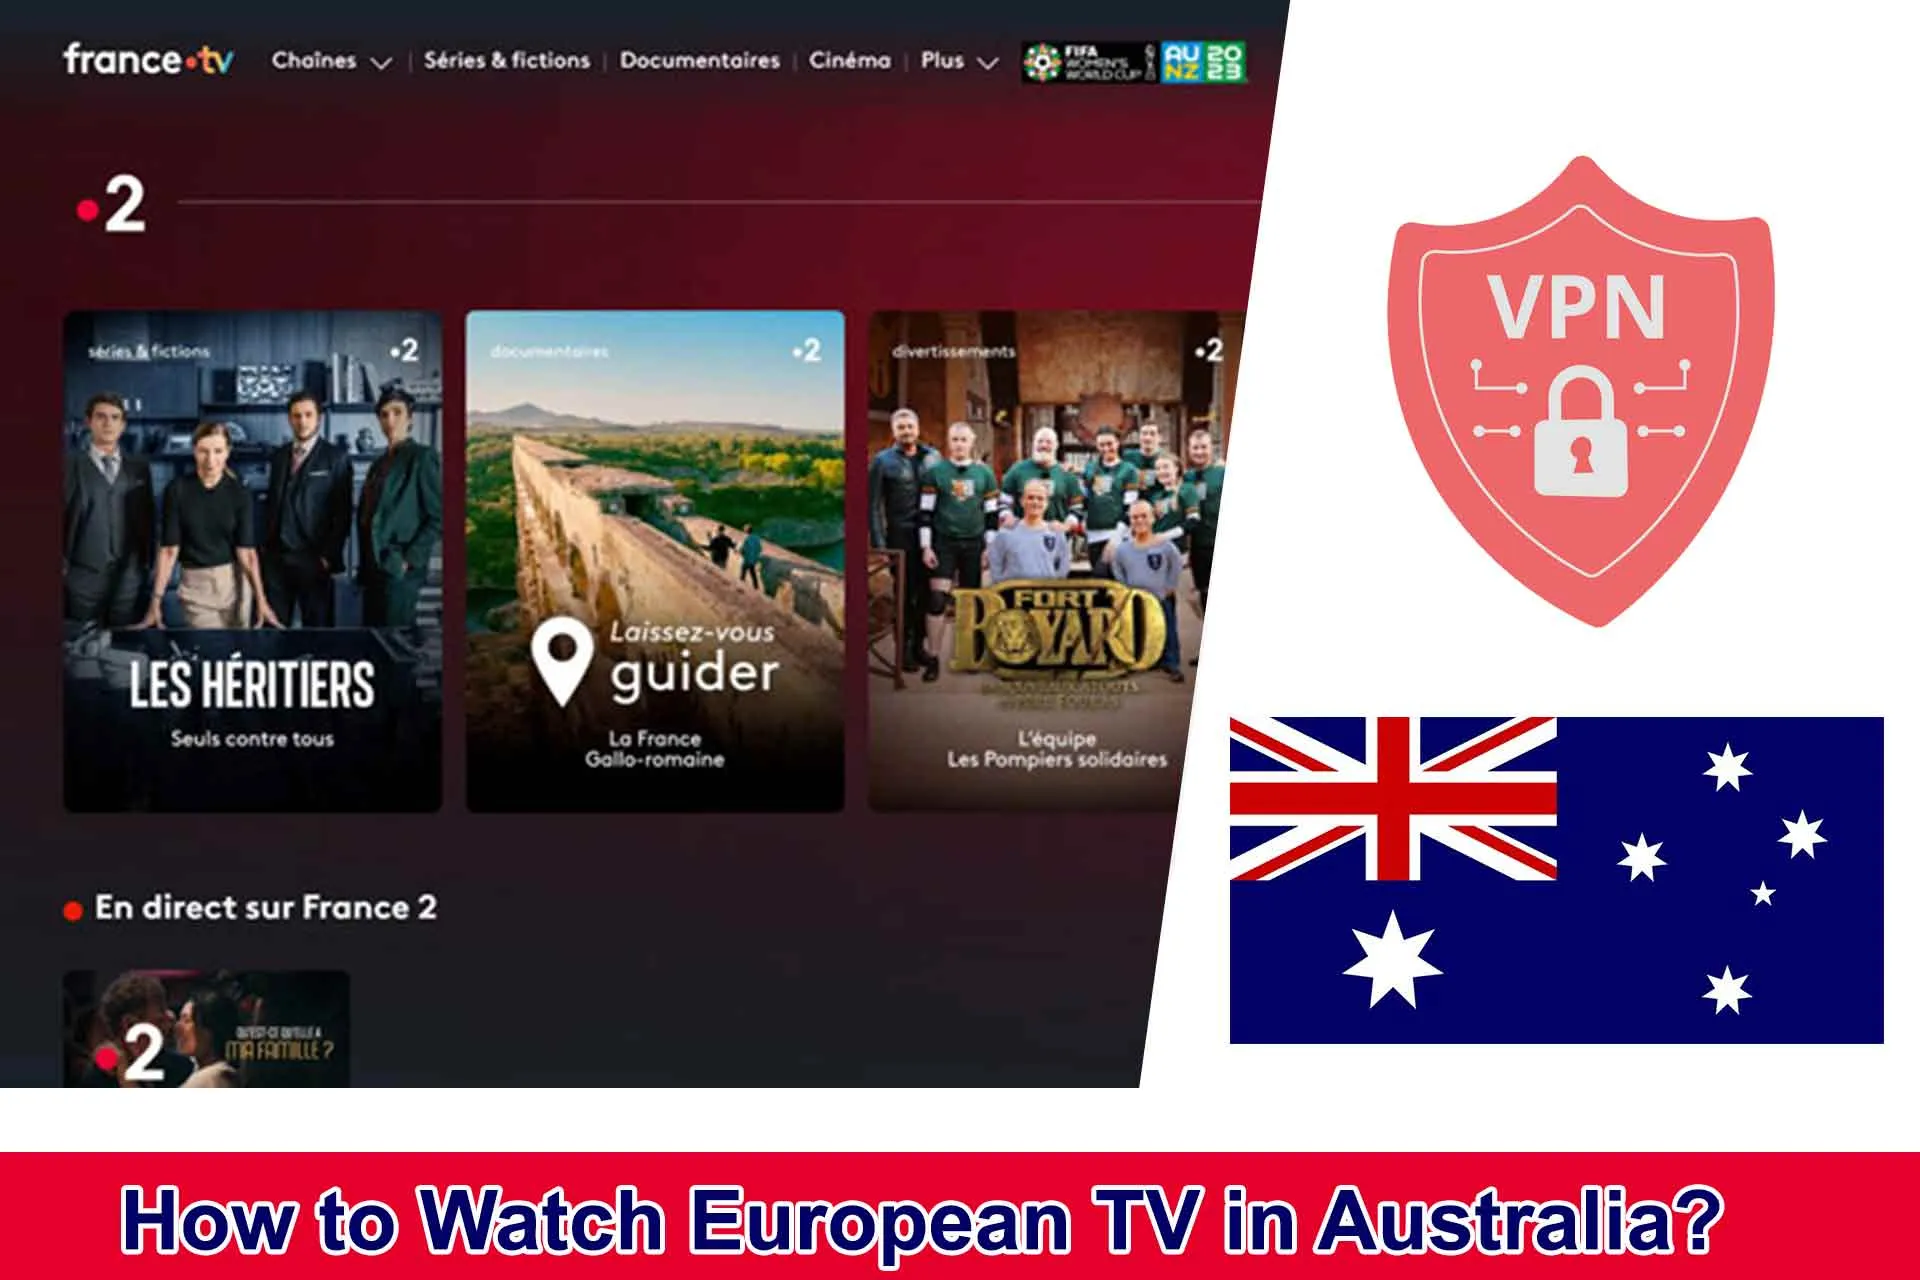 How to watch European TV in Australia